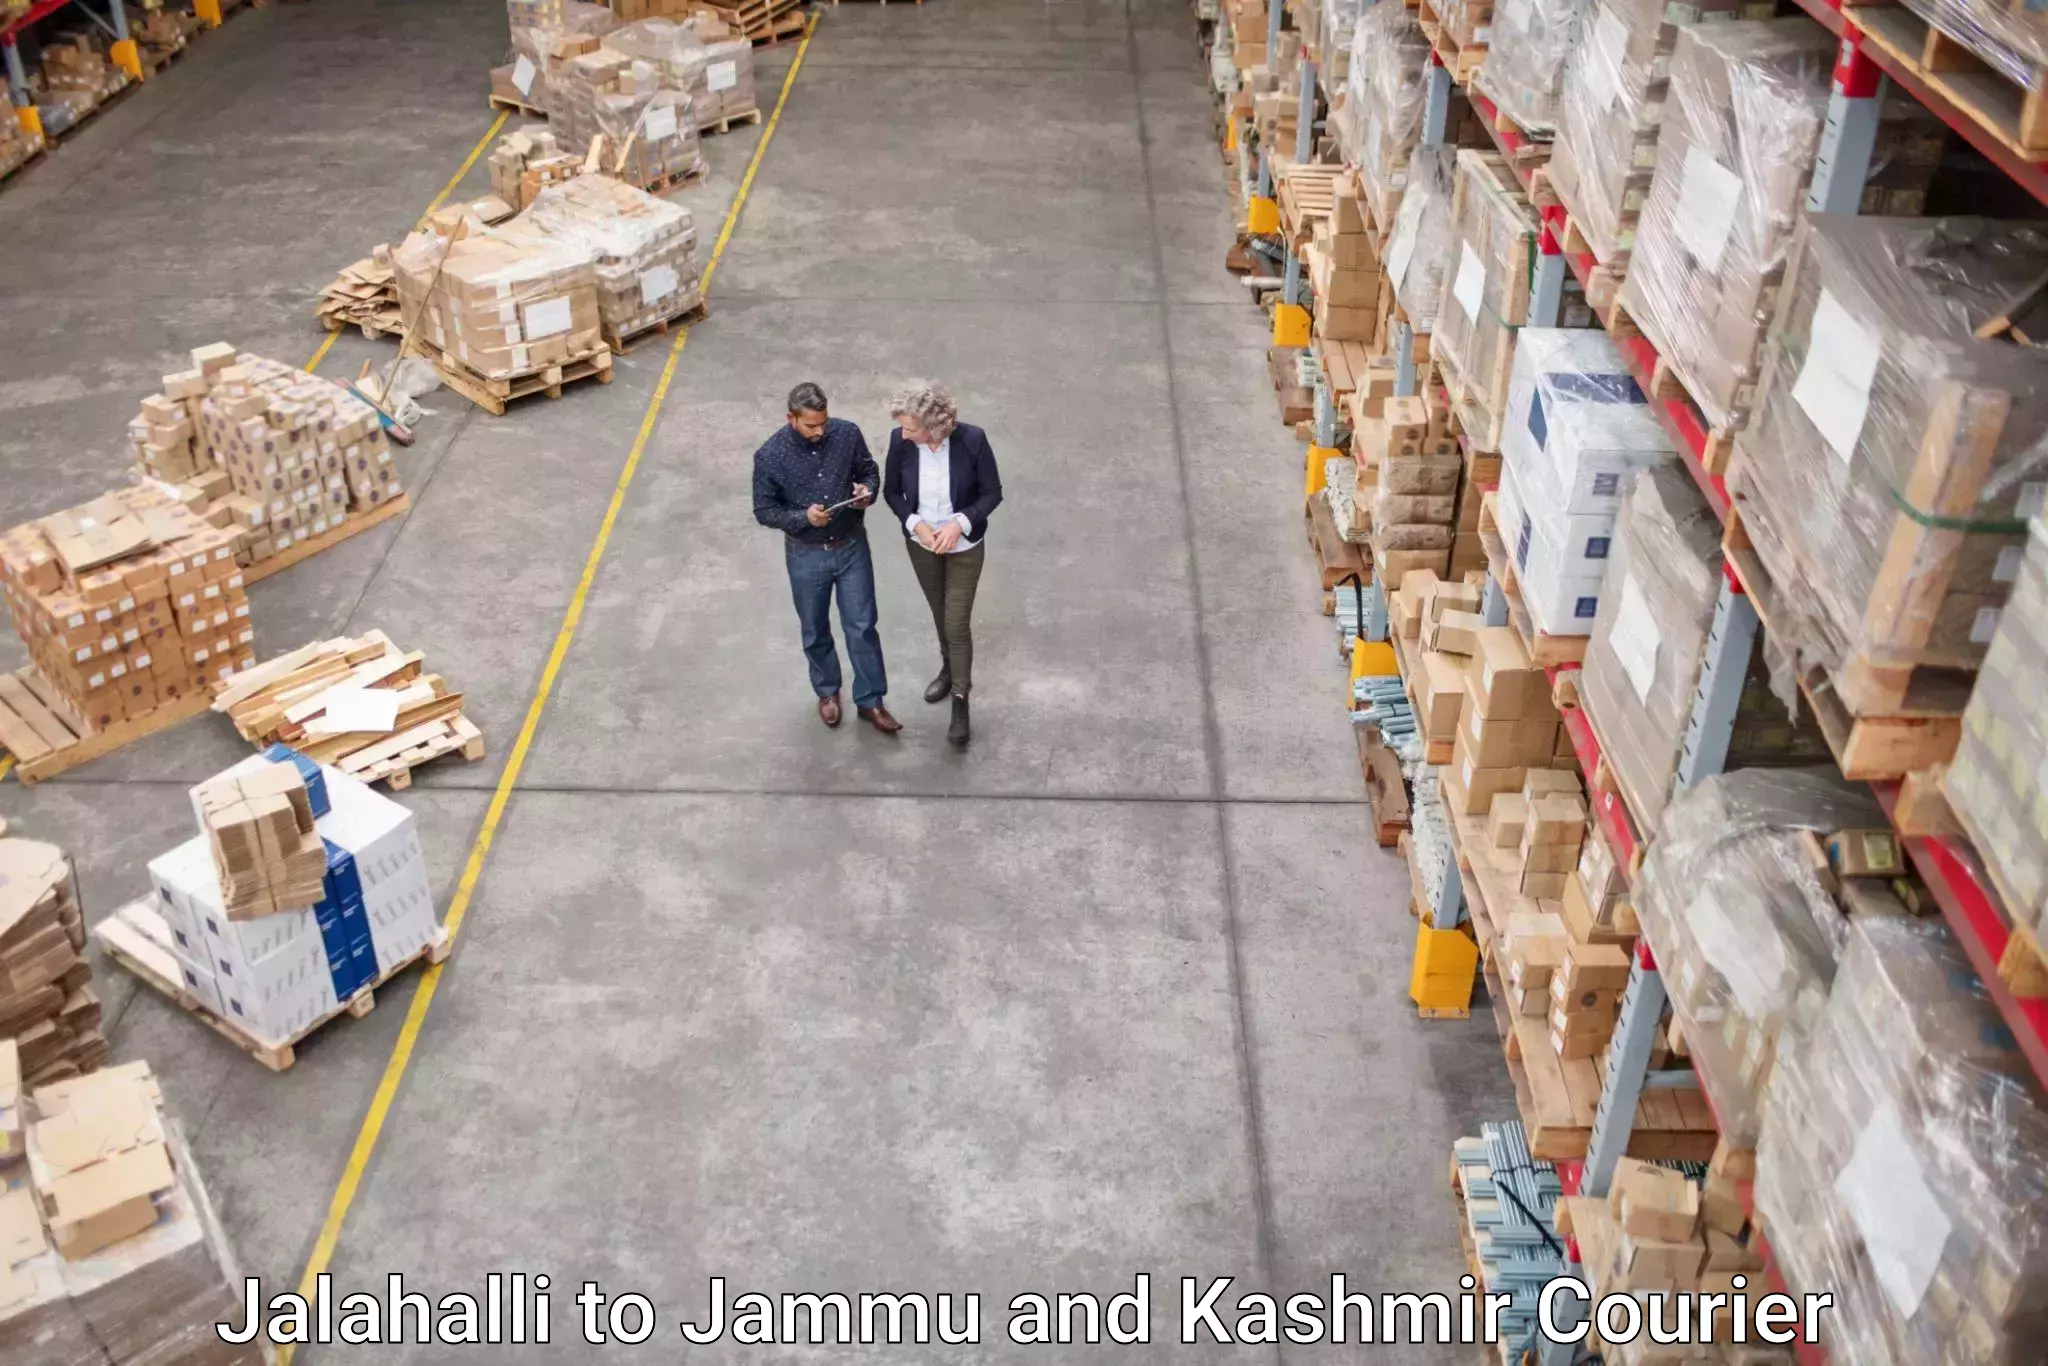 Express delivery capabilities Jalahalli to Anantnag